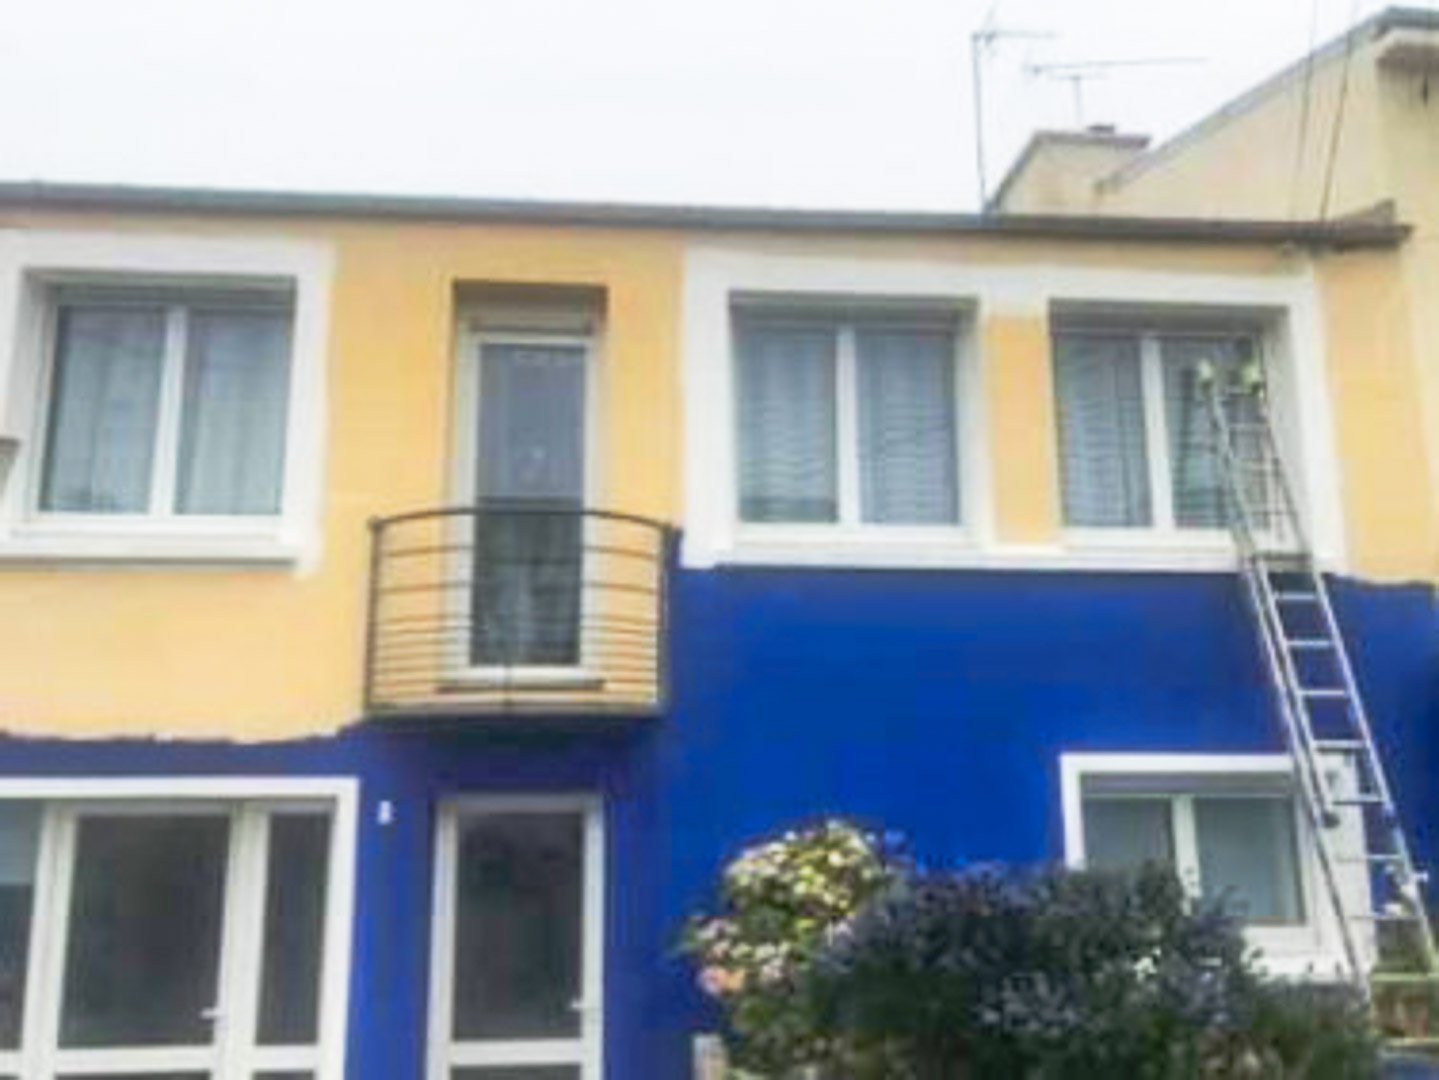 Ravalement-façade-maison-bleu-jaune-Finsitère